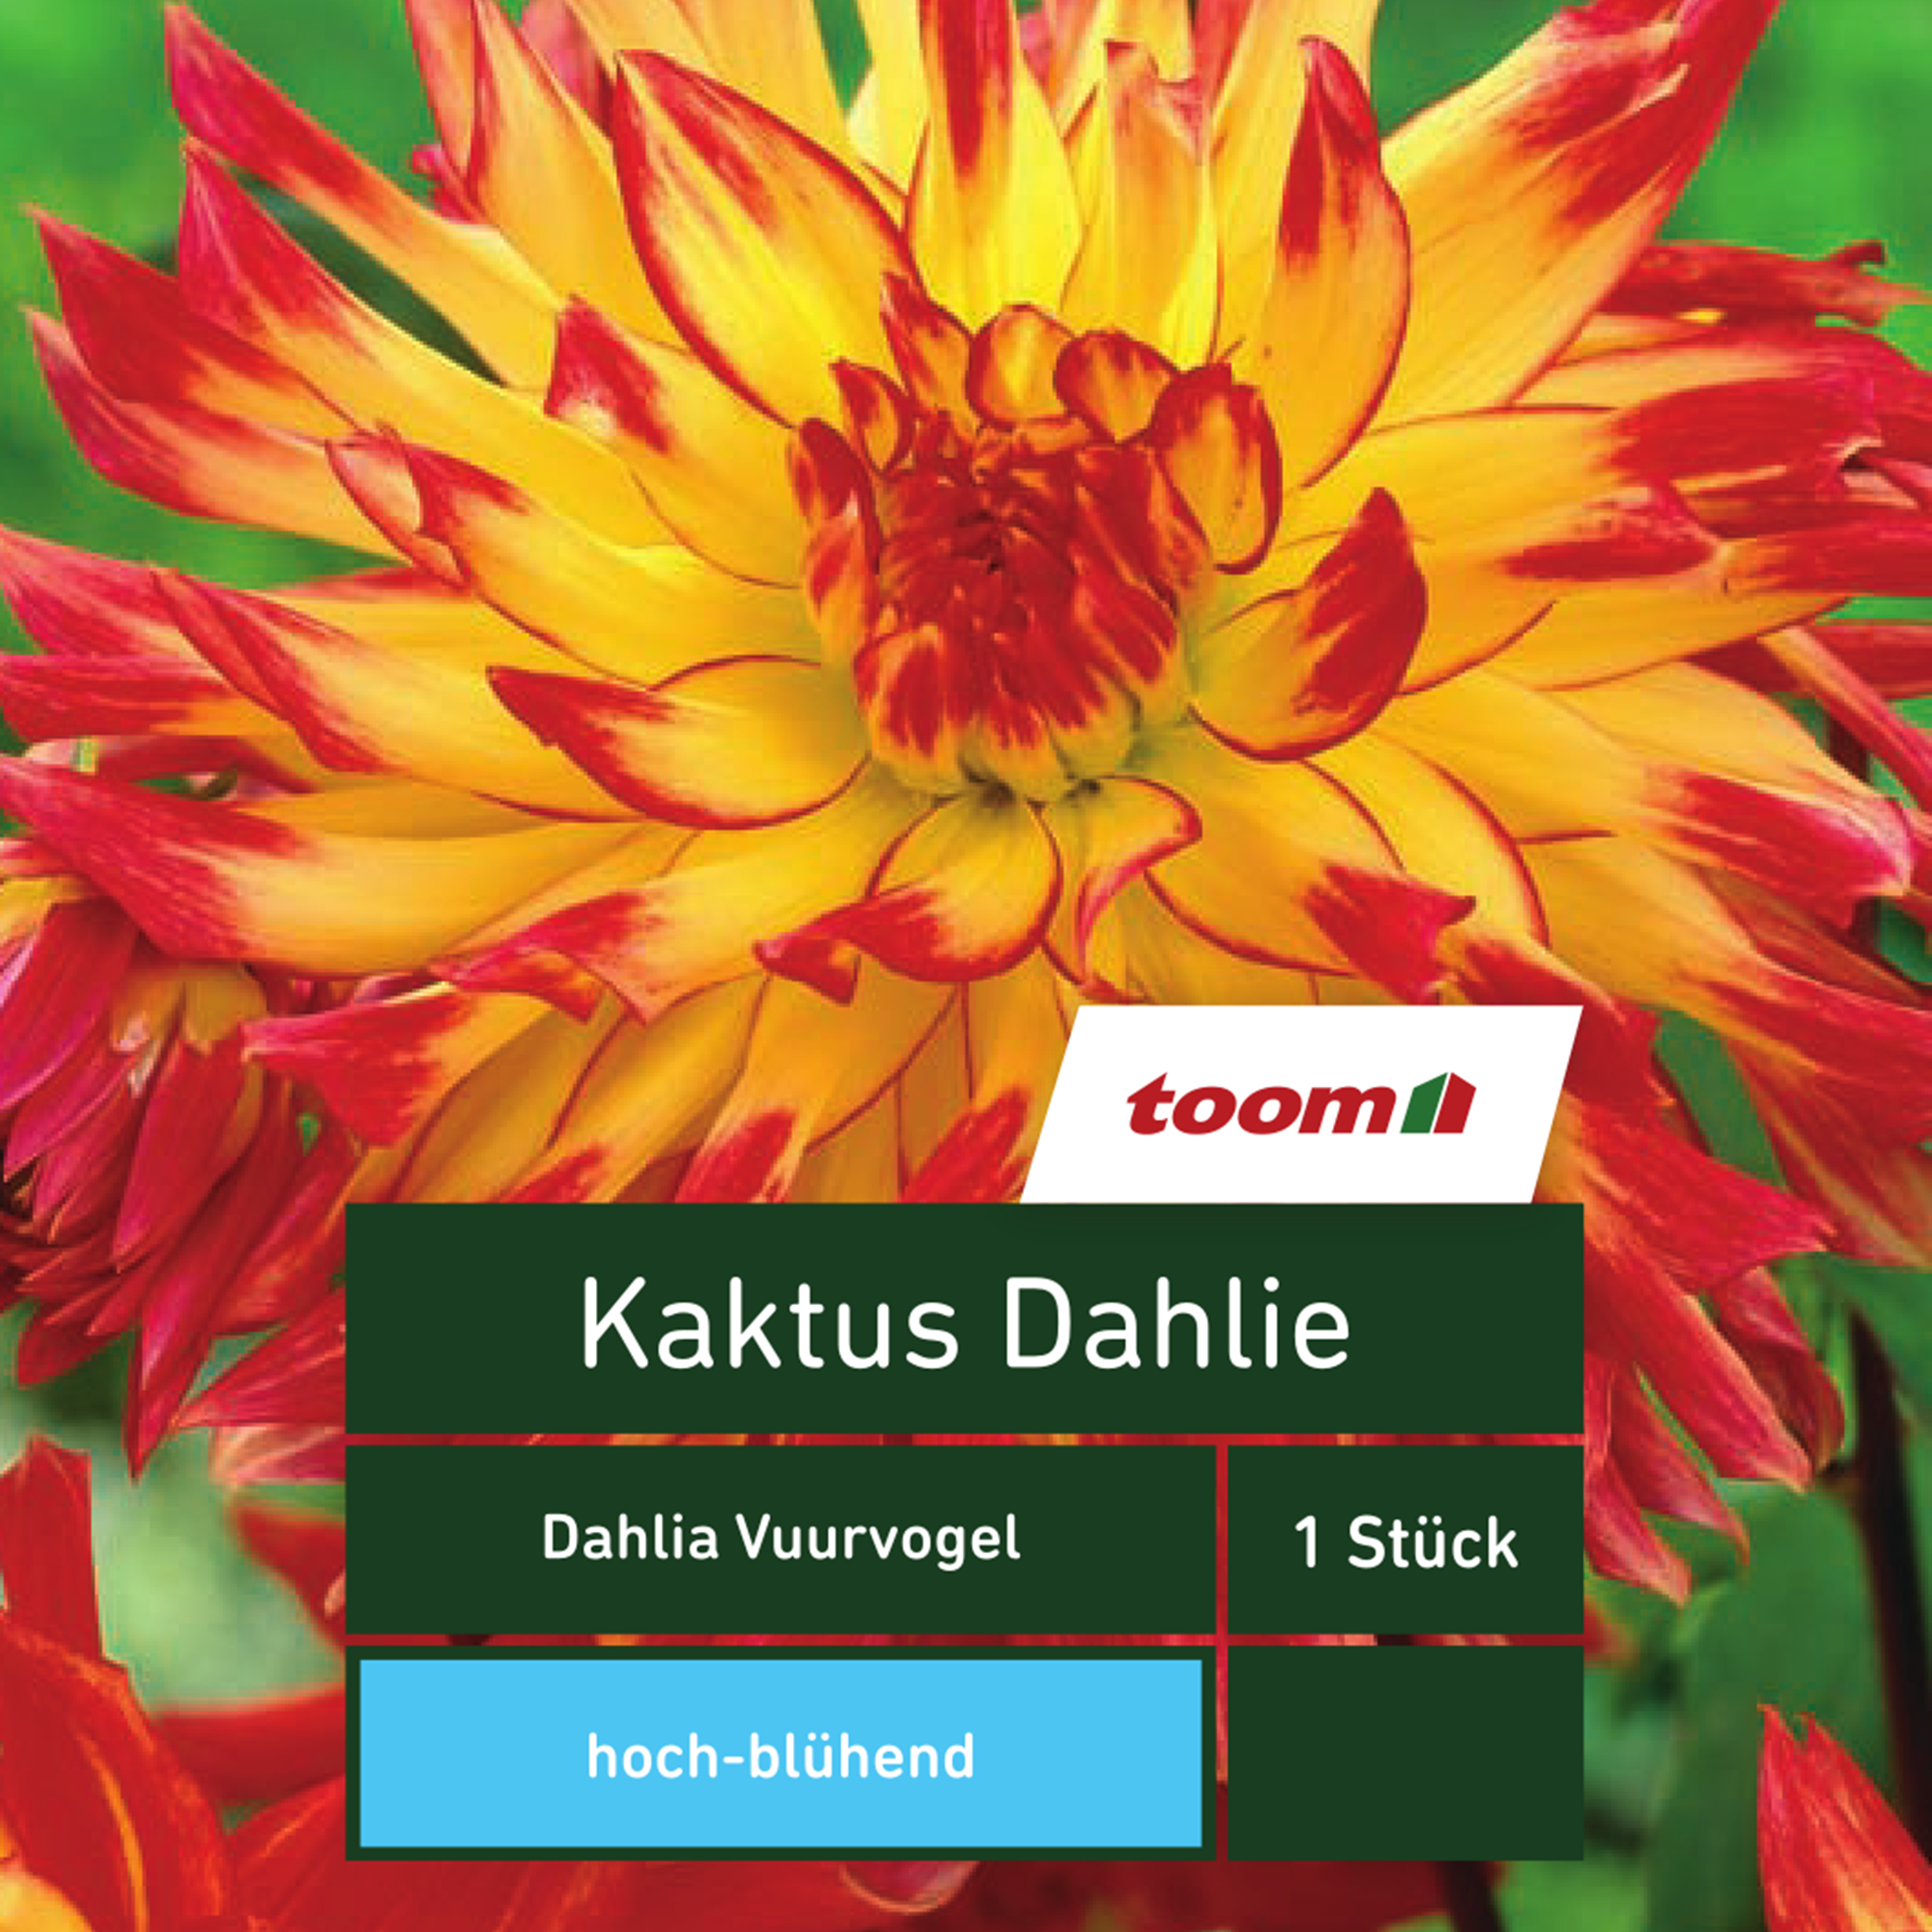 Kaktus-Dahlie 'Dahlia Vuurvogel', 1 Stück, gelb-rot + product picture